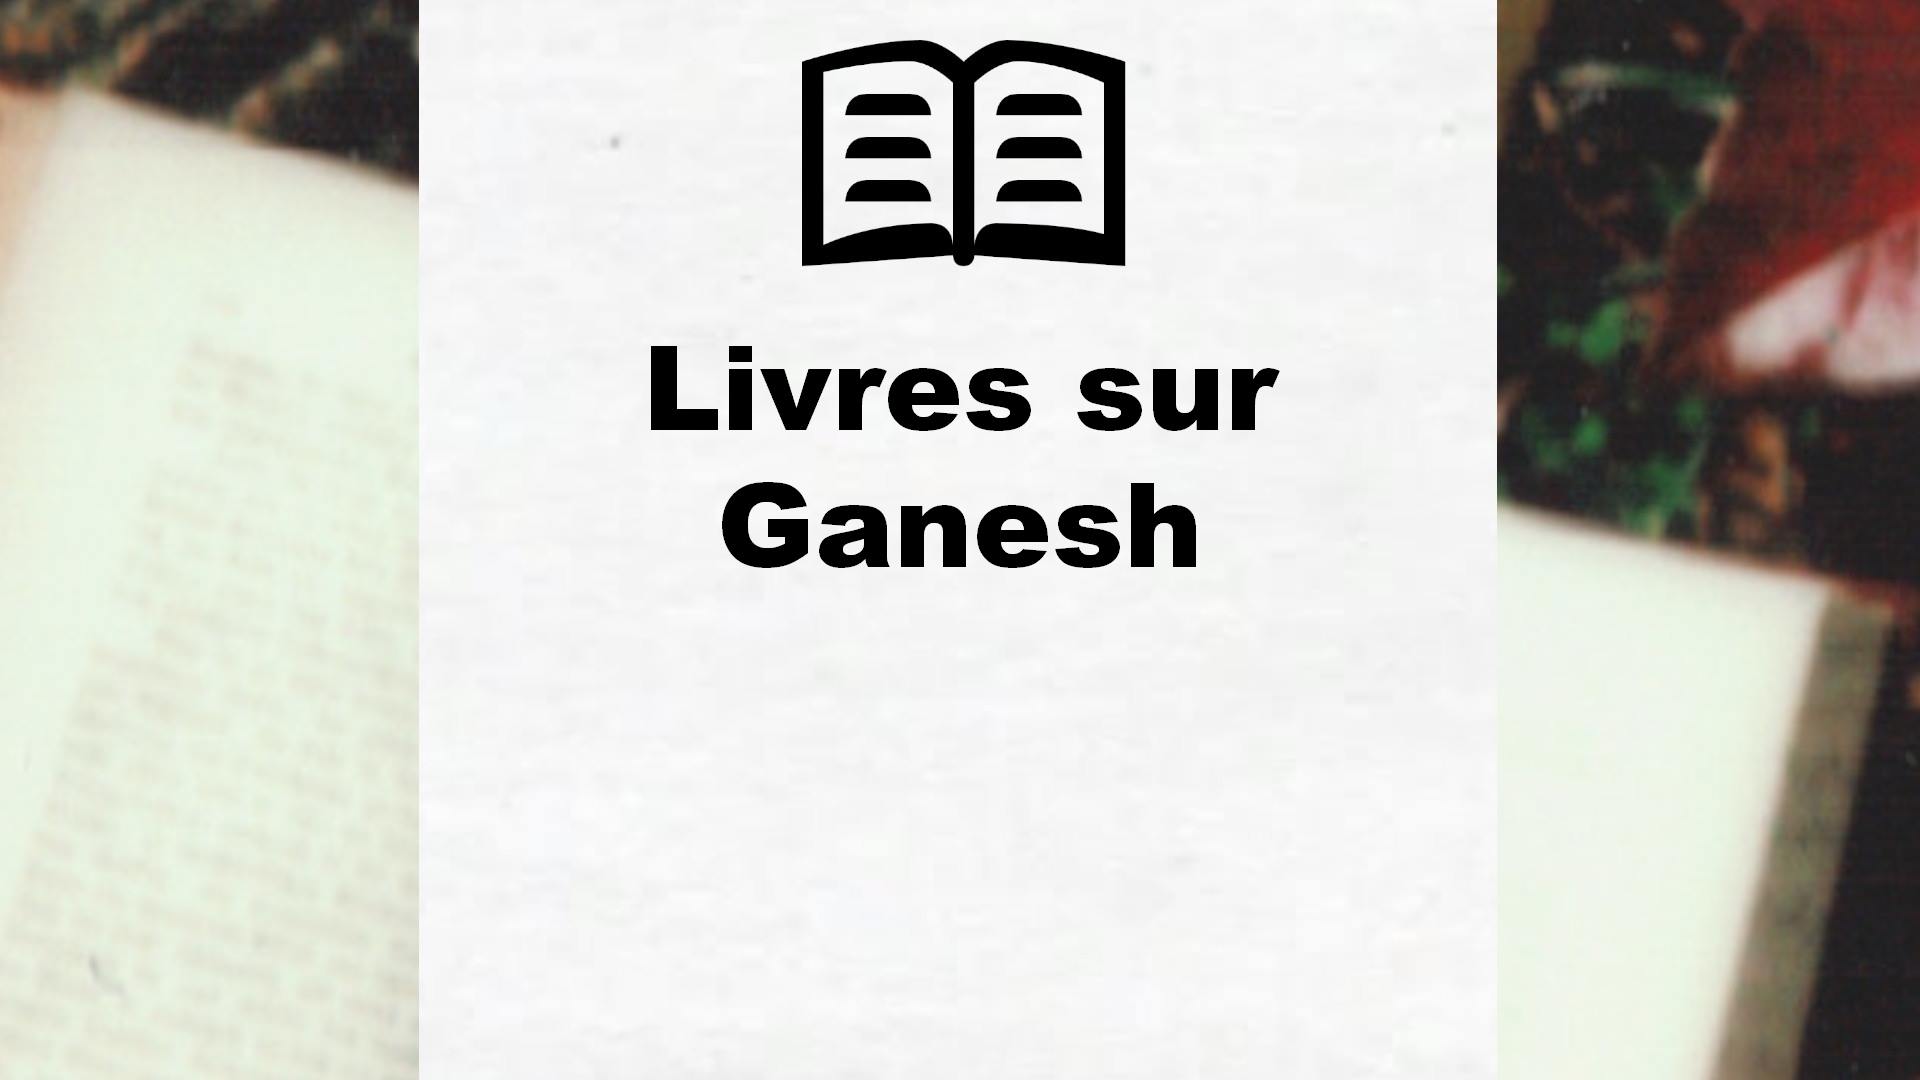 Livres sur Ganesh